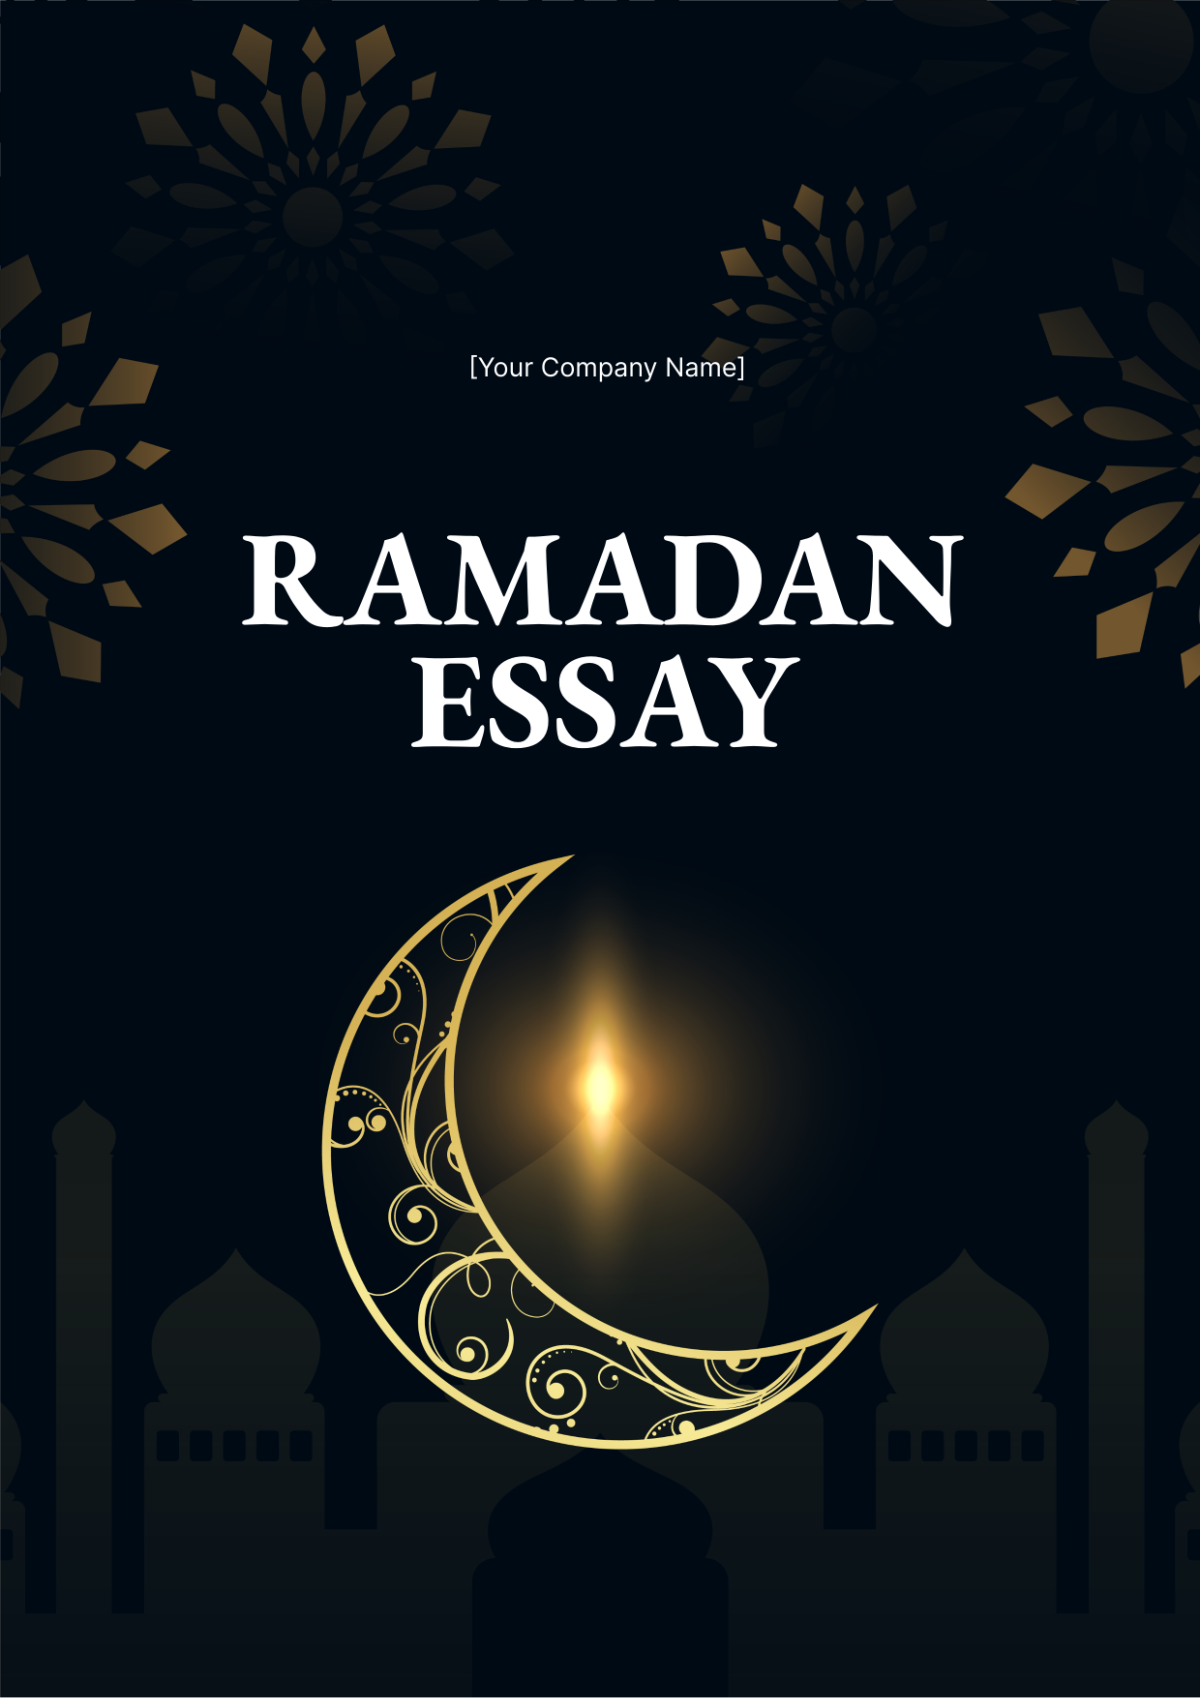 Free Ramadan Essay for Class Students